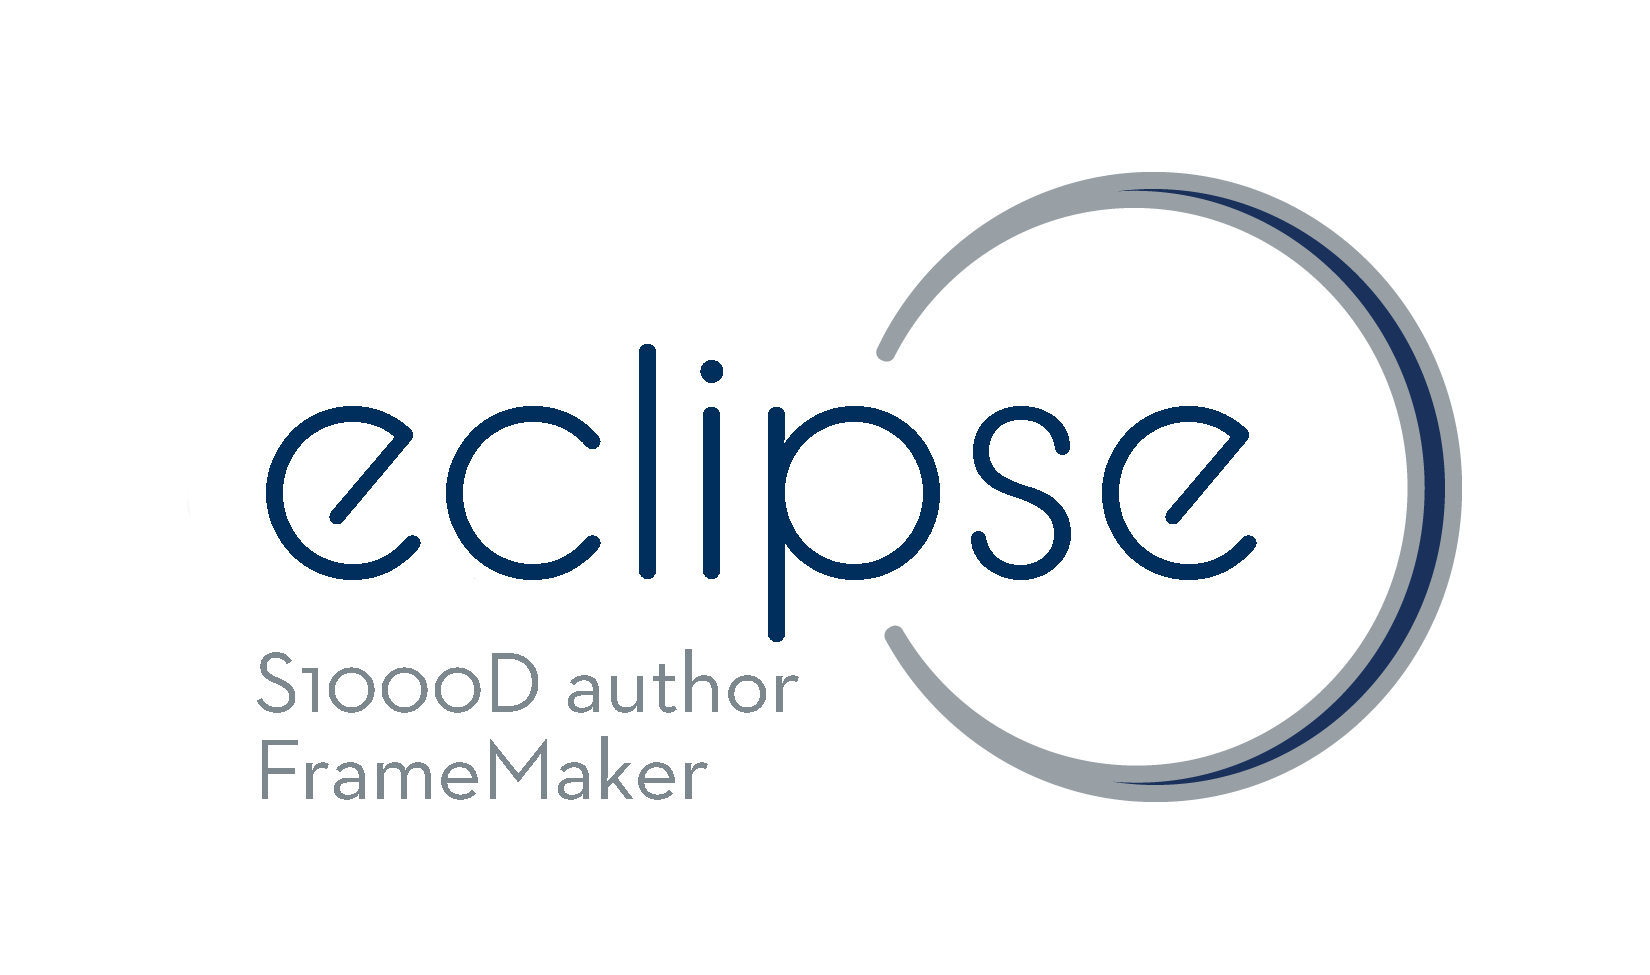 eclipse S1000D author for Adobe FrameMaker - product transparent splash screen